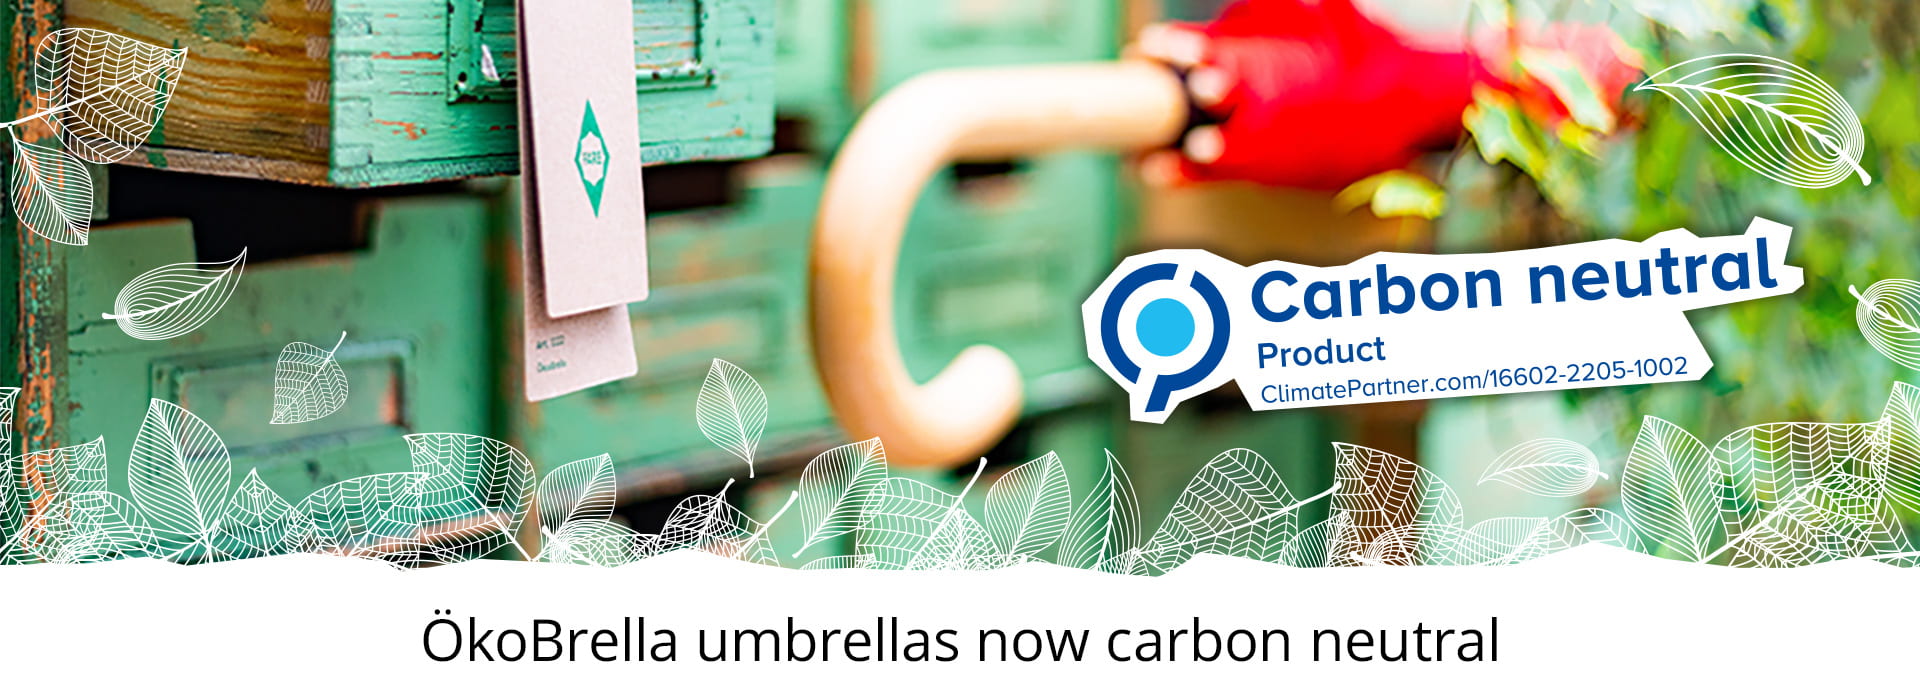 climate neutral ecobrella umbrellas by Fare